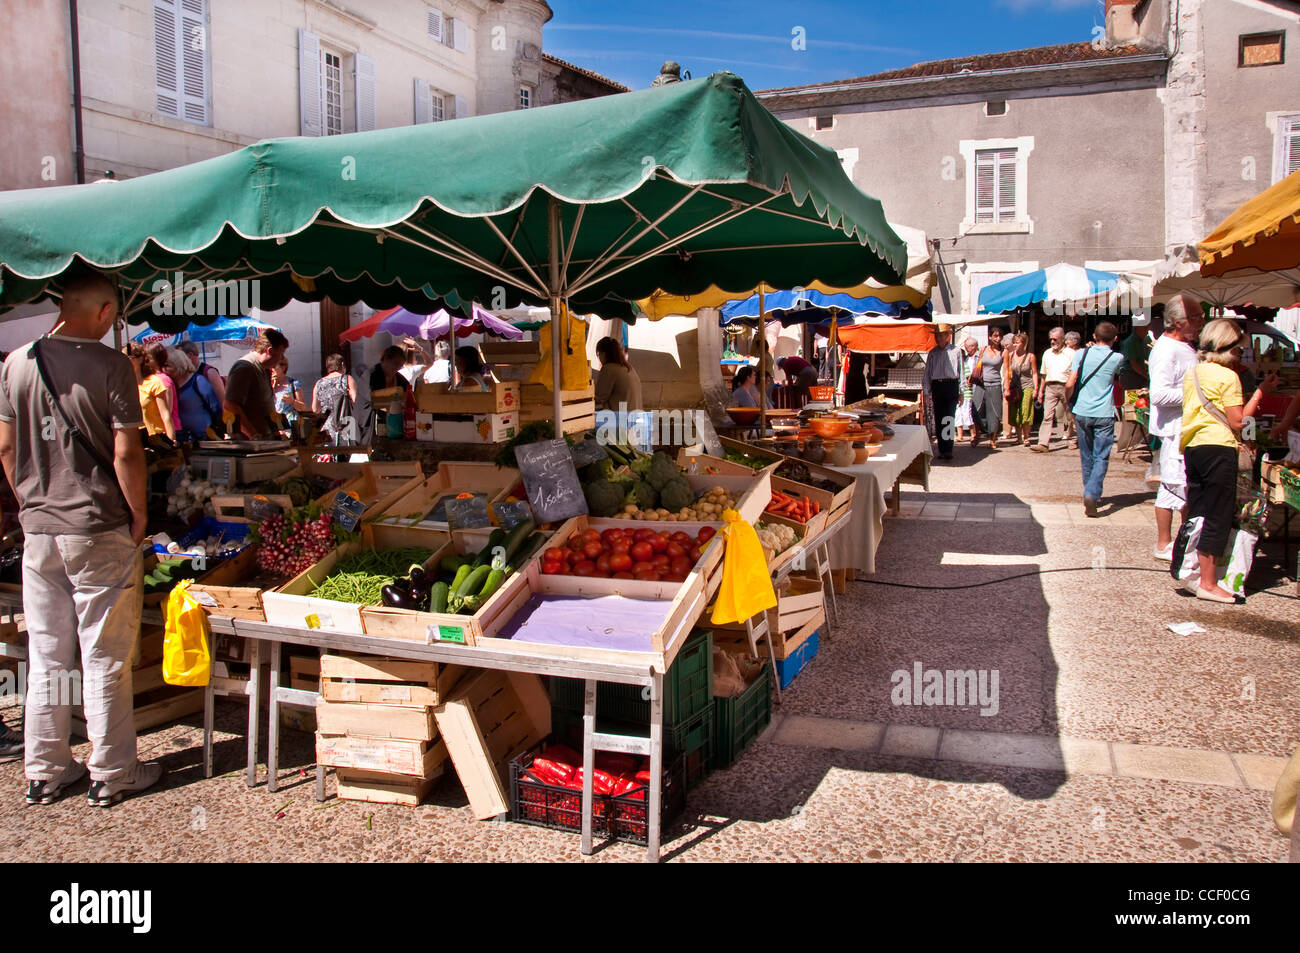 Saint-Astier (Périgord) fresh market - Southern France Stock Photo